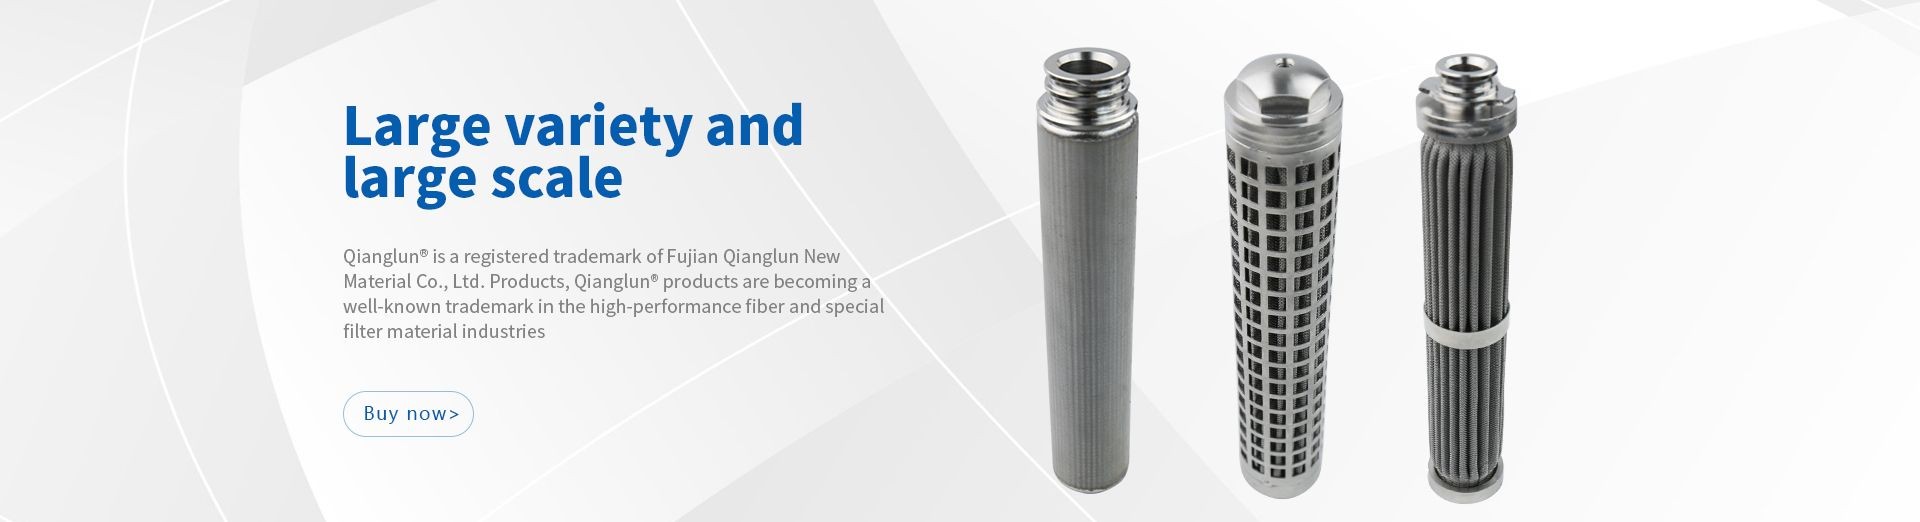 Fujian QL New Material Co., Ltd.